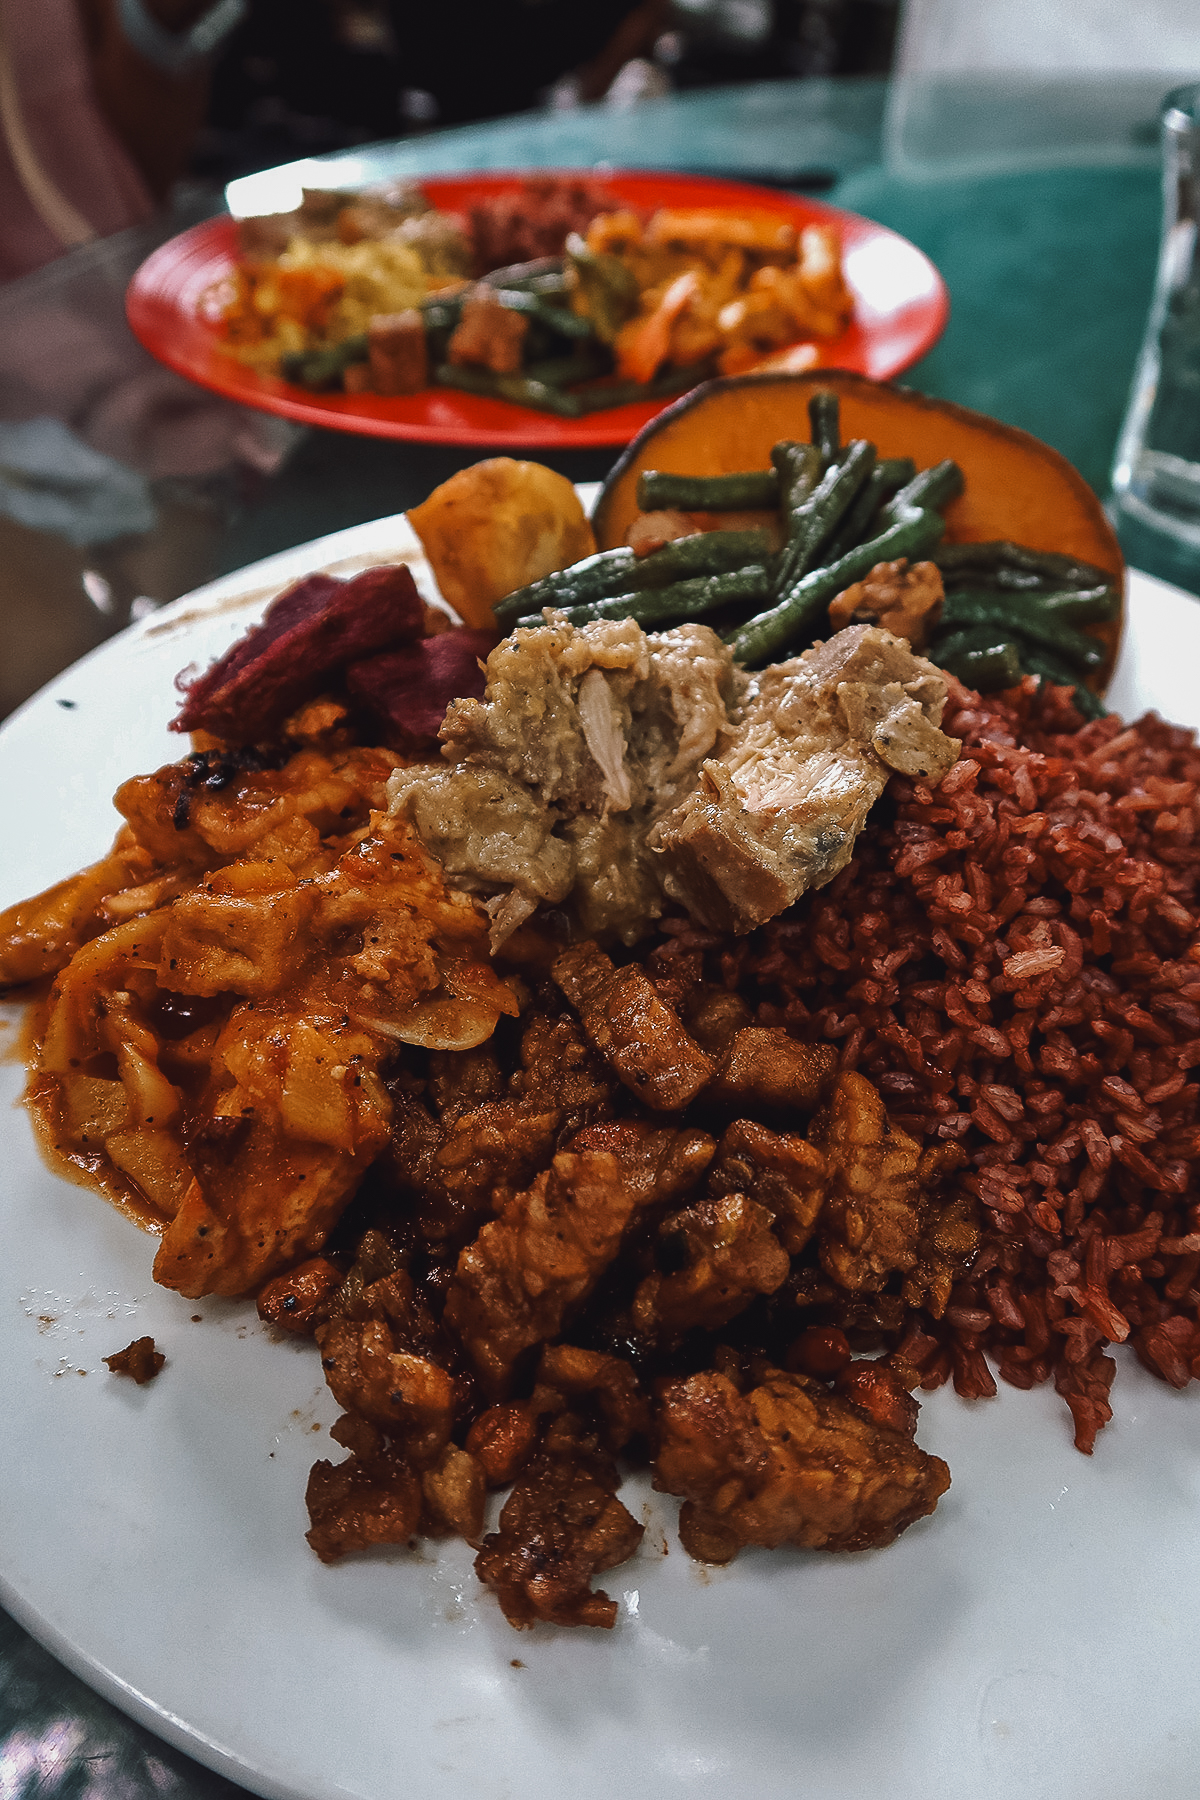 Vegan food at a restaurant in Ubud